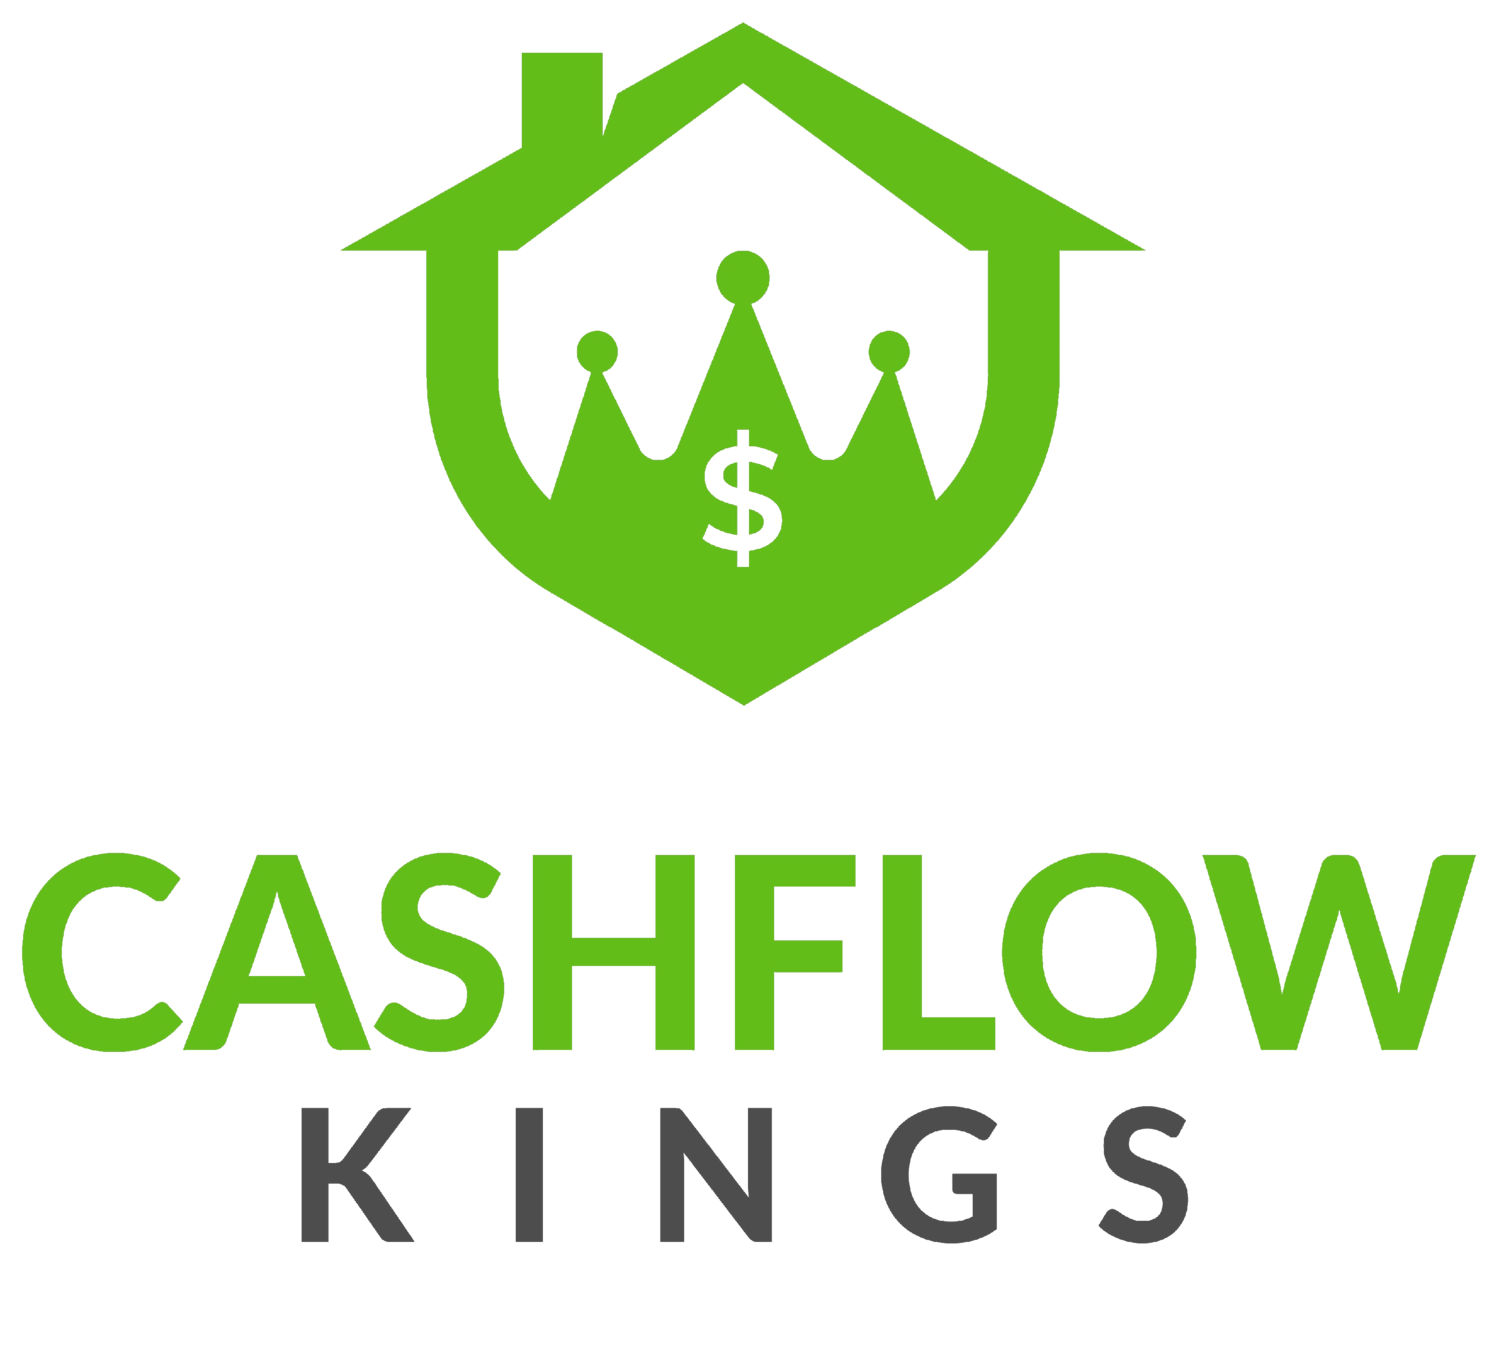 The Cash Flow Kings